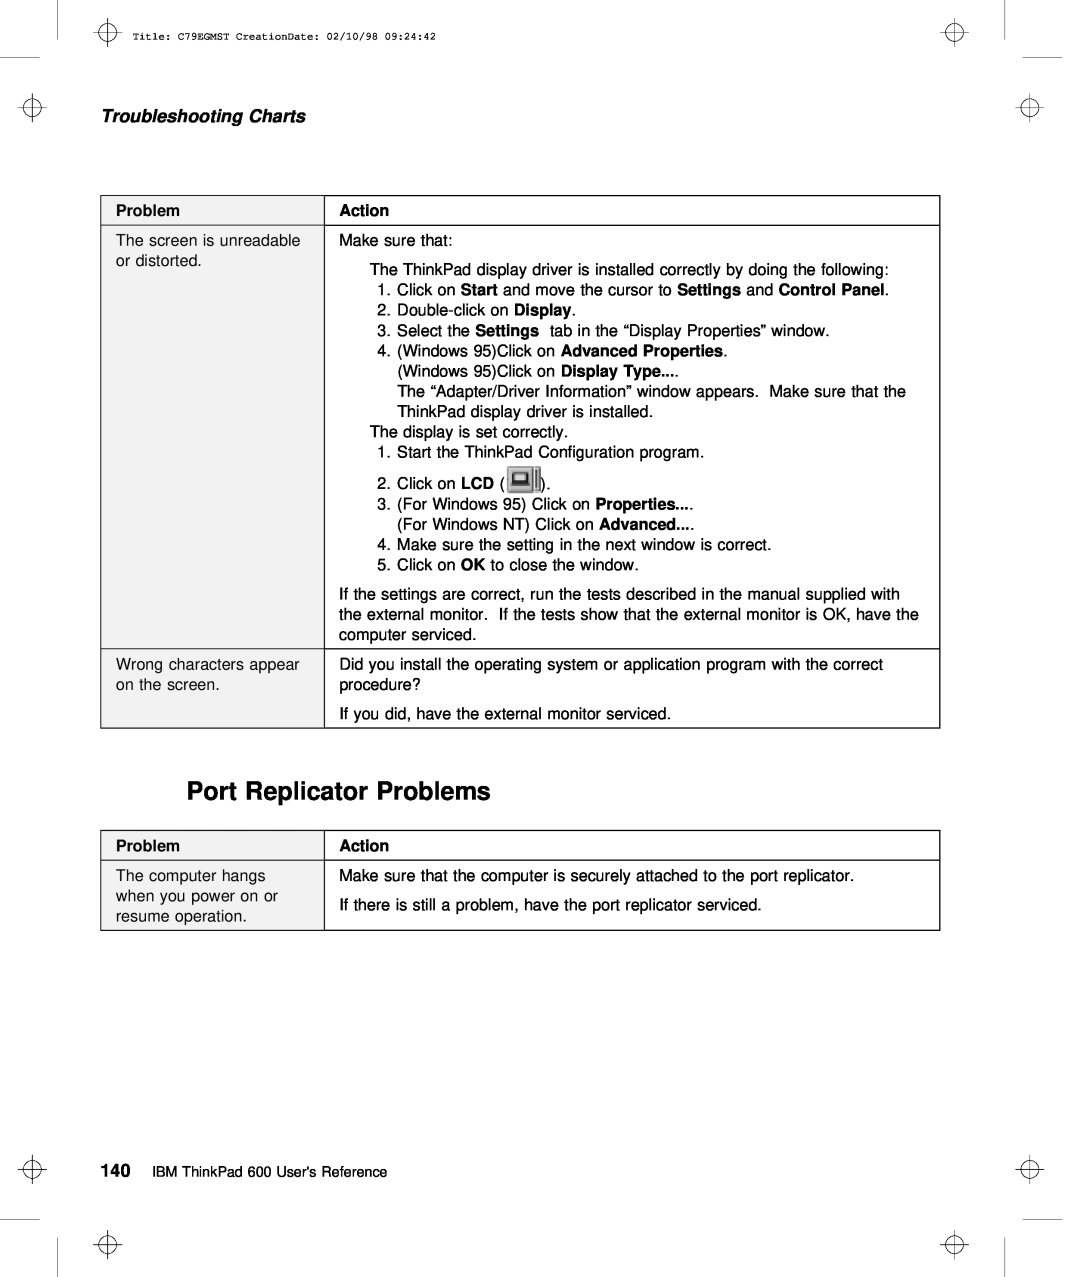 IBM C79EGMST manual Port, Problems, Troubleshooting Charts, Replicator 